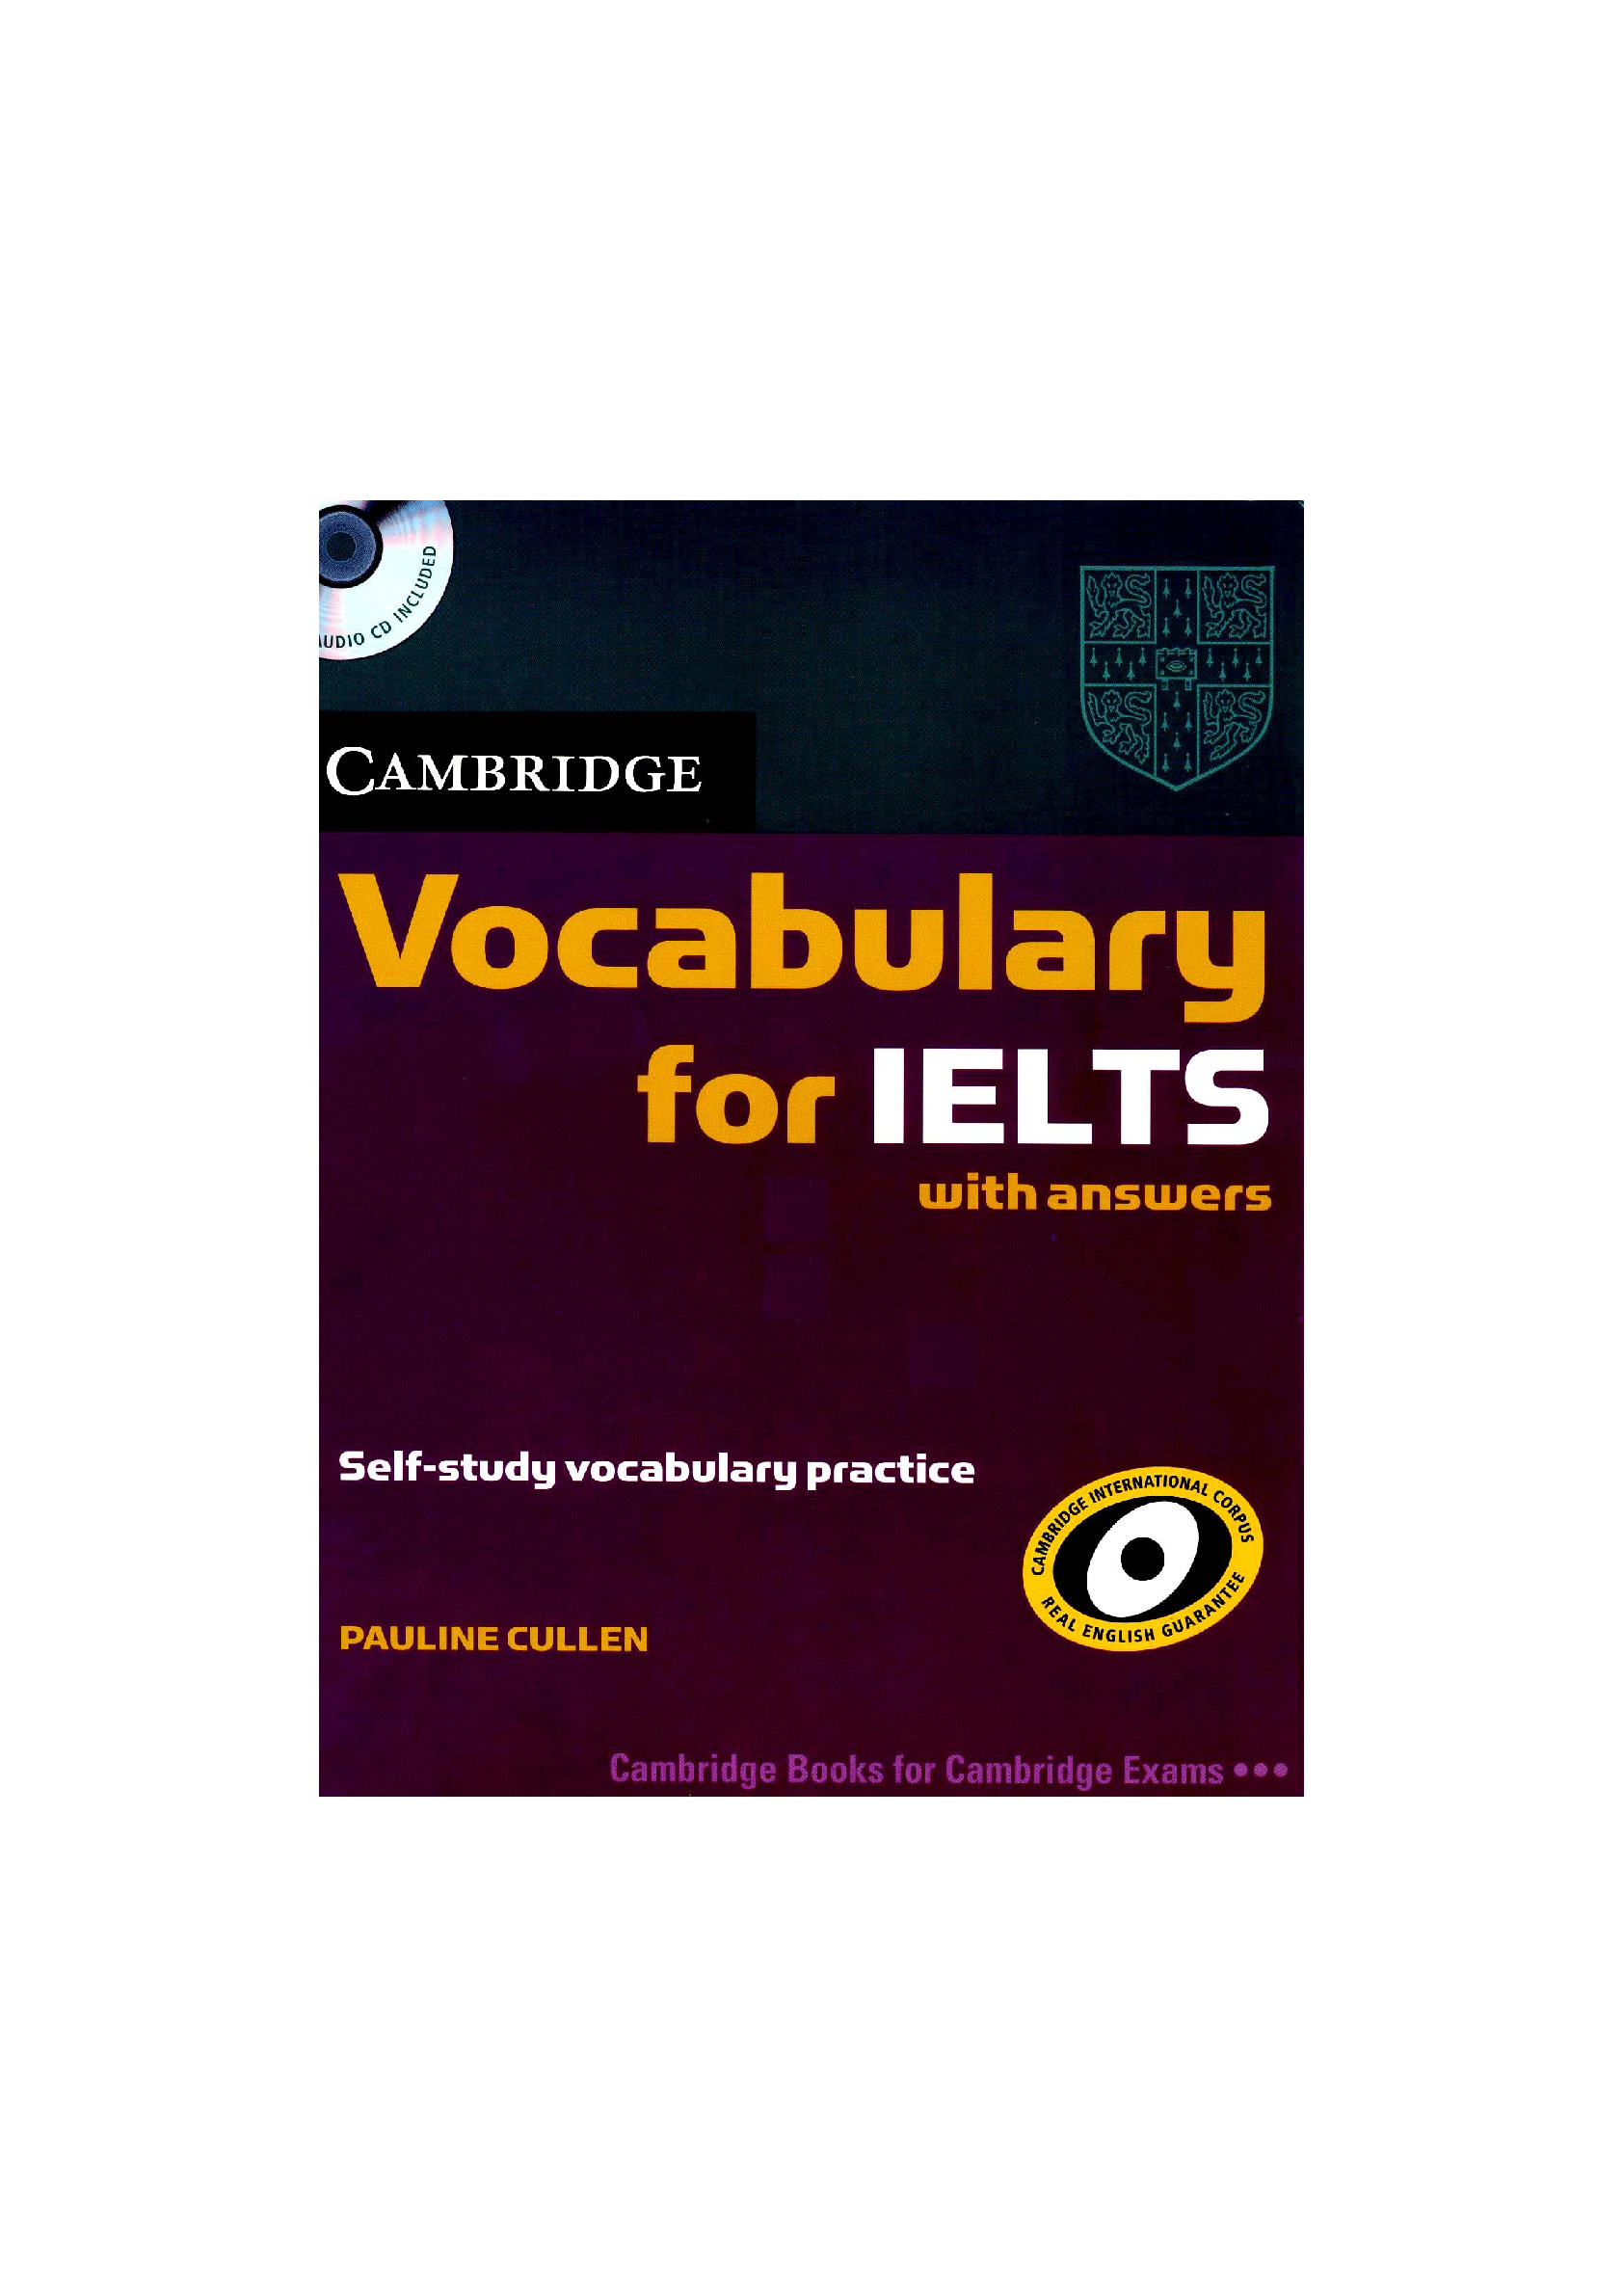 Sách Cambridge Vocabulary for IELTS PDF | Xem online, tải PDF miễn phí (trang 1)